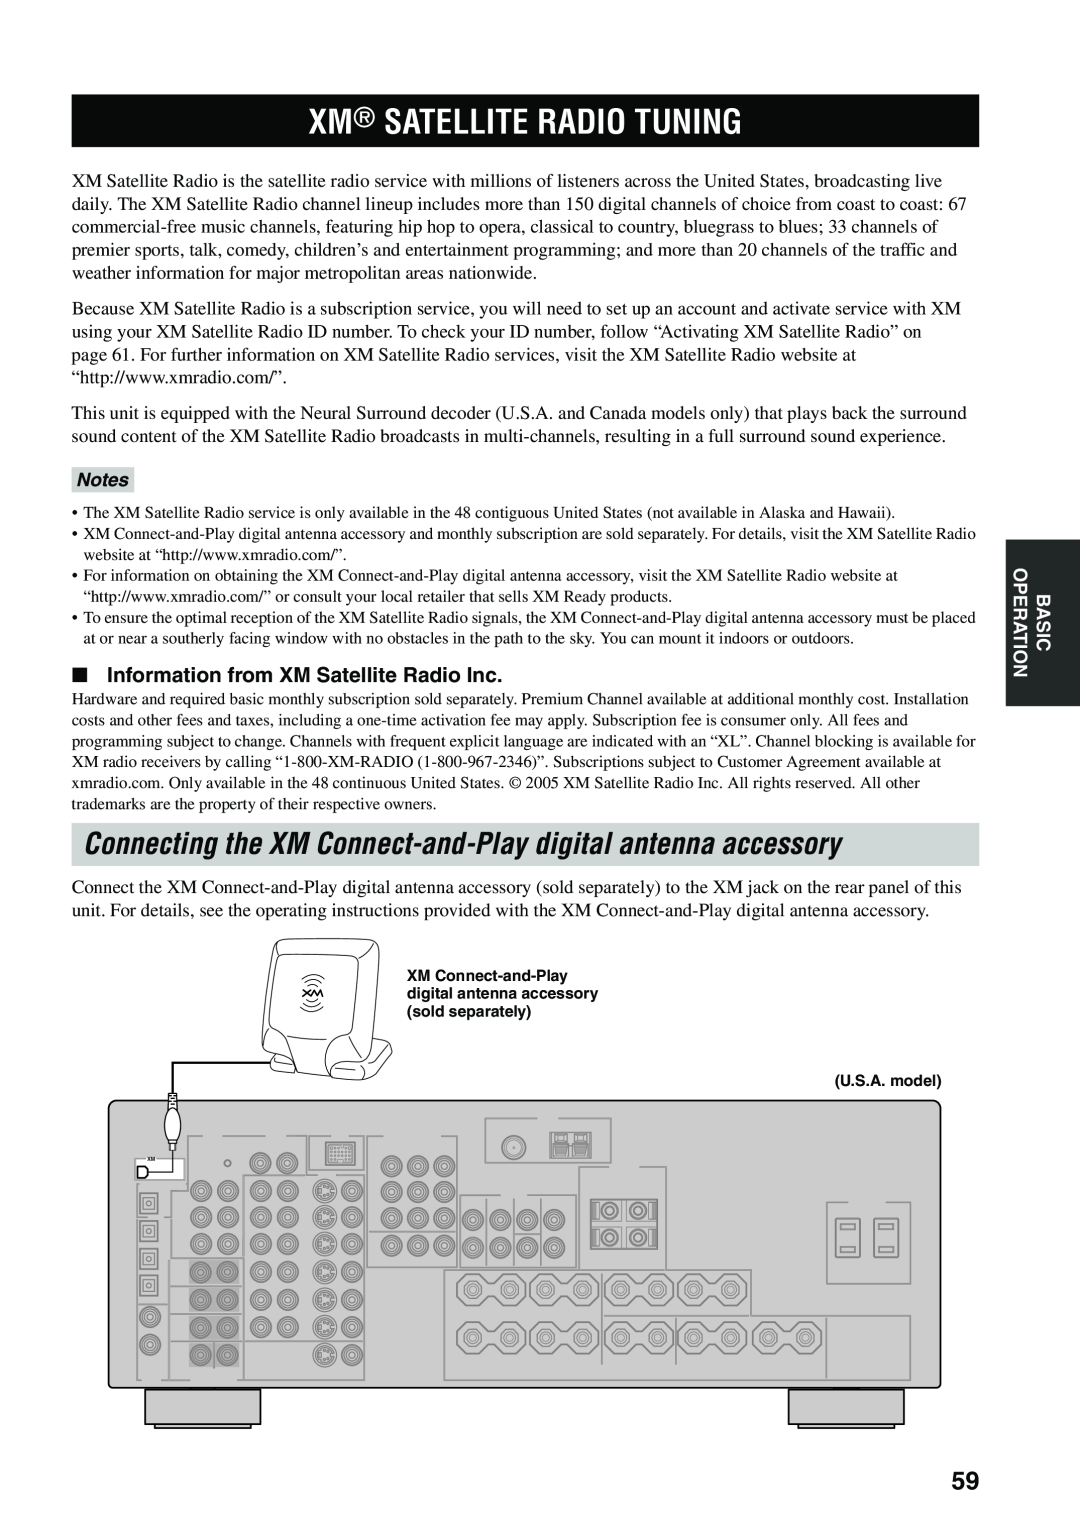 Yamaha HTR-5960 owner manual Xm Satellite Radio Tuning, Information from XM Satellite Radio Inc, Notes 